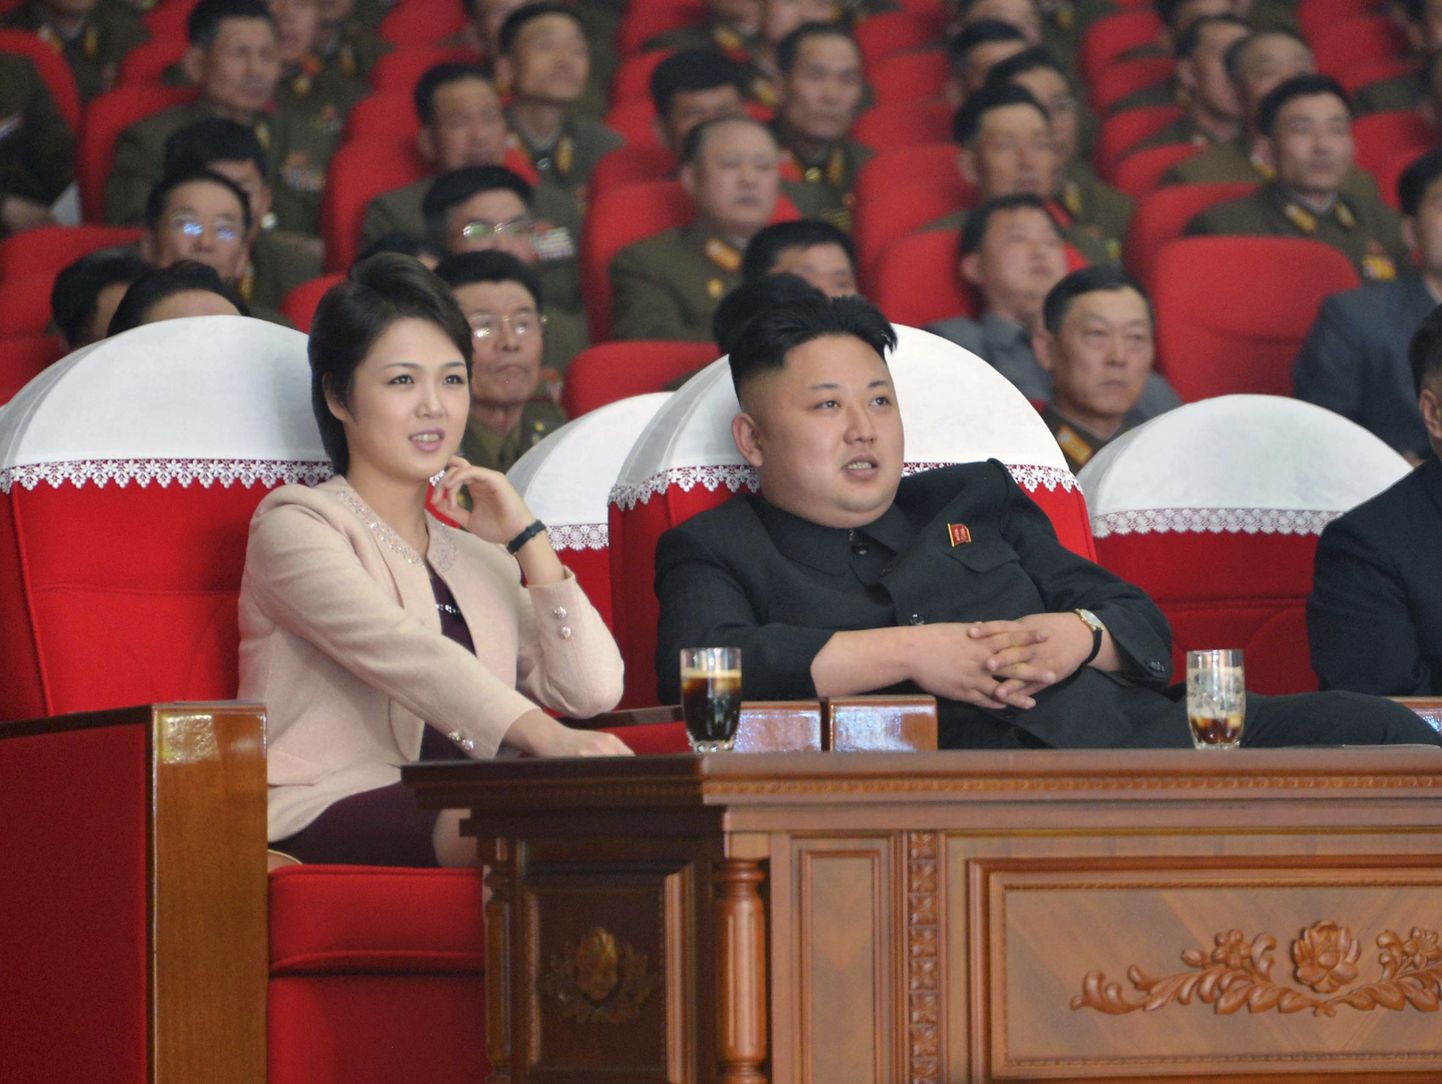 Põhja-Korea diktaator Kim Jong-un koos abikaasa Ri Sol-juga kontserdil.